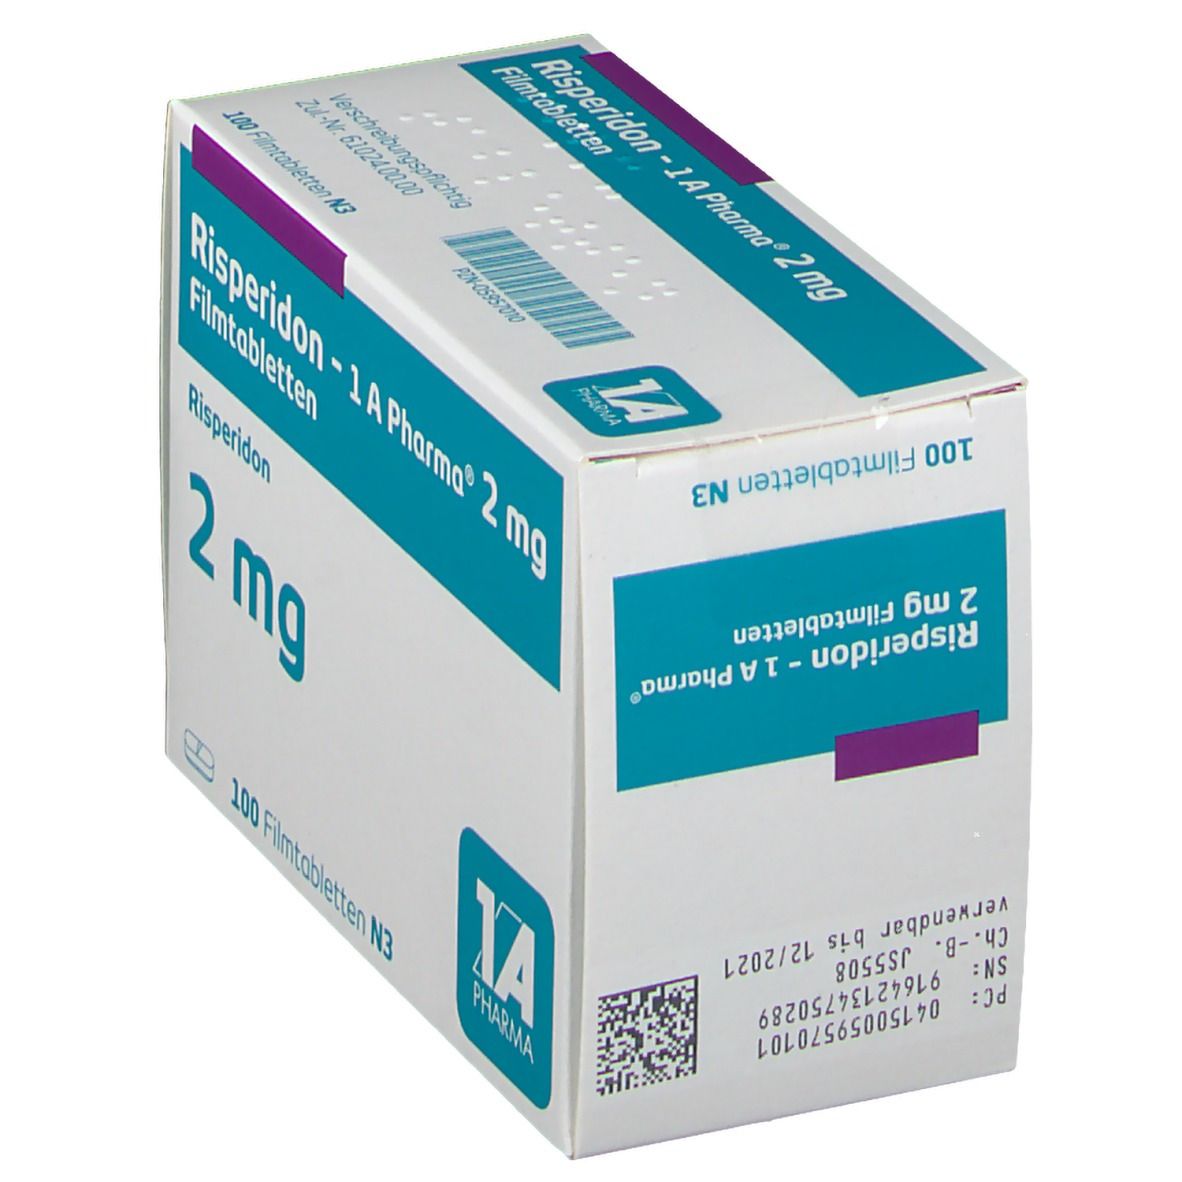 Risperidon 1A Pharma® 2Mg